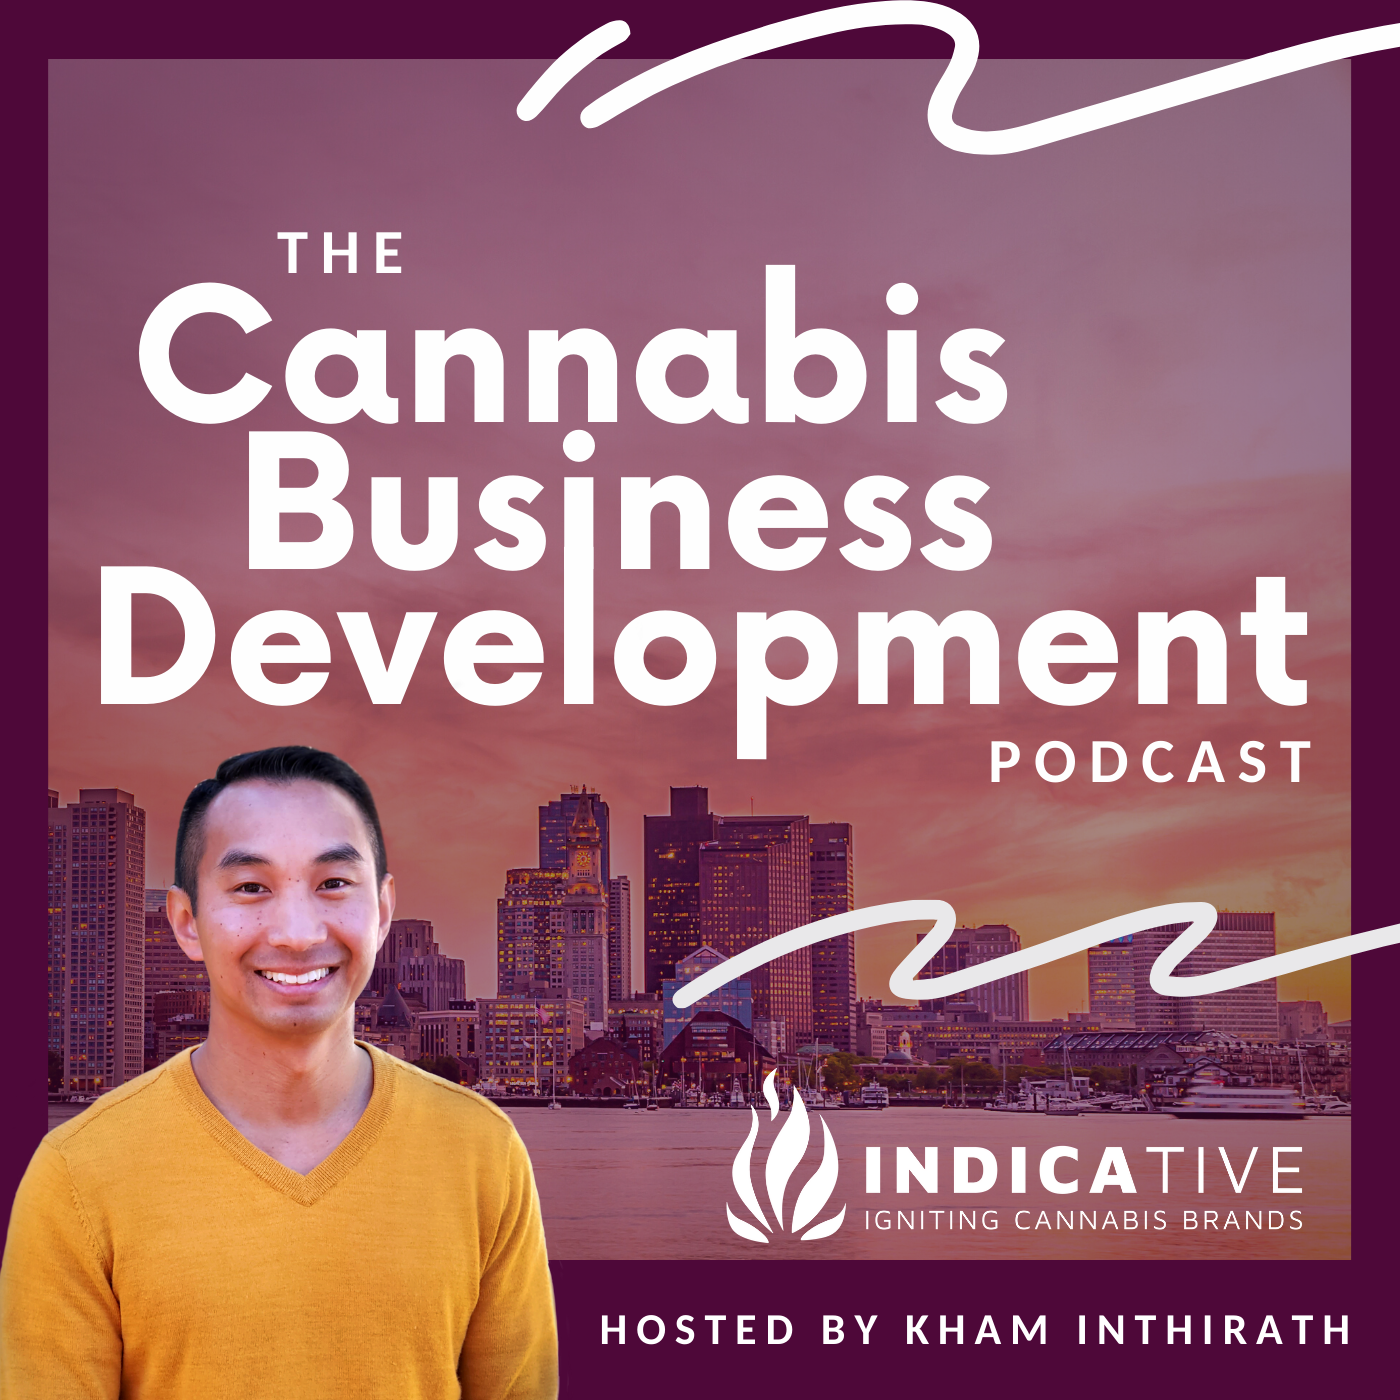 The Cannabis Business Development Podcast